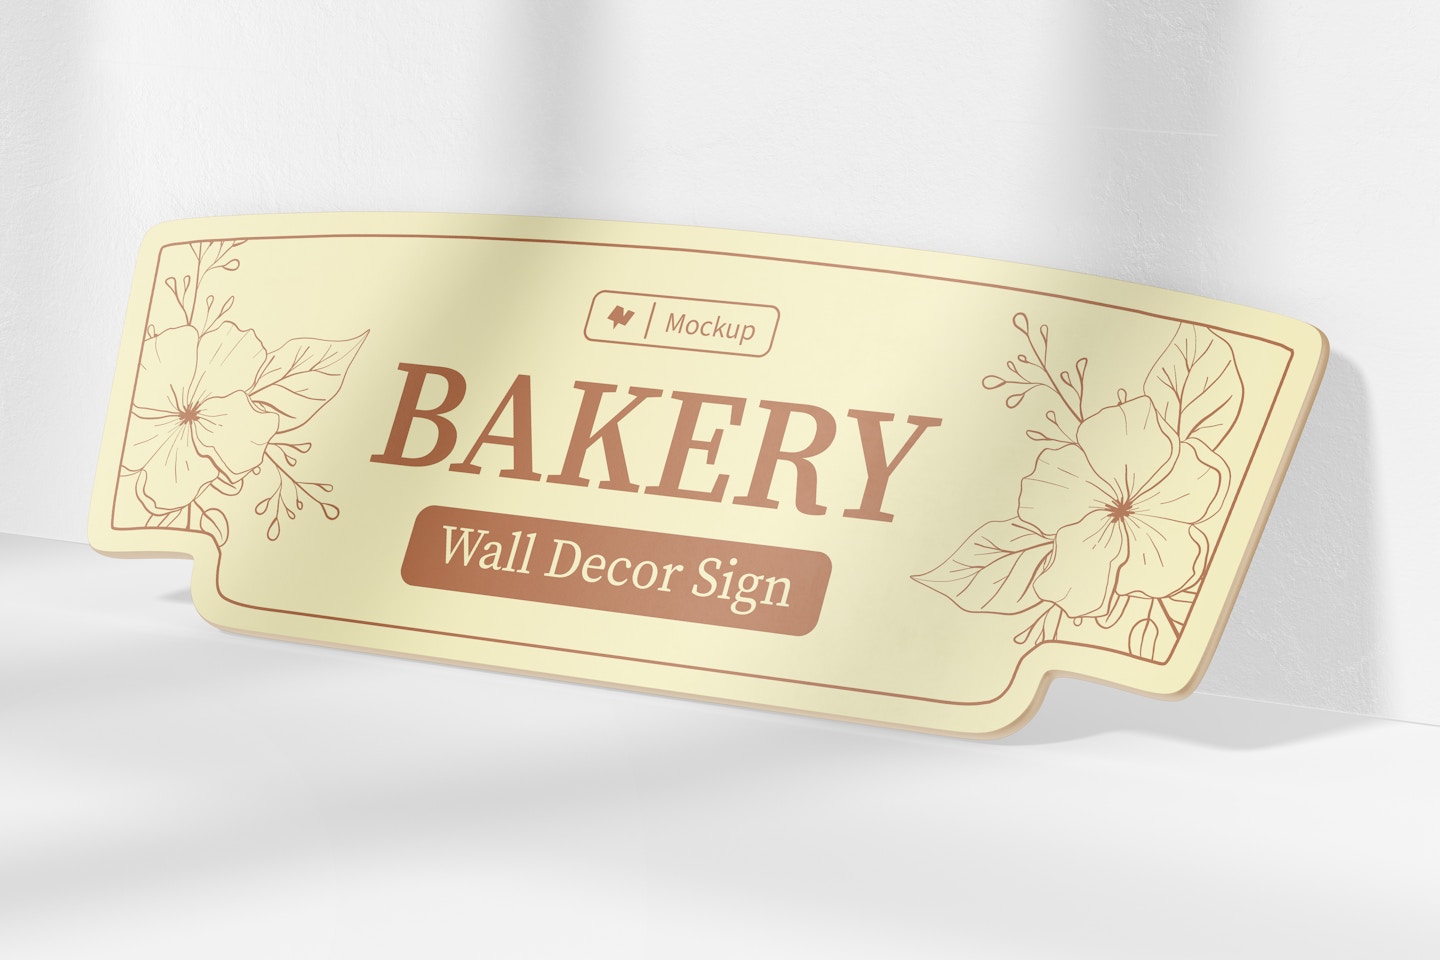 Bakery Wall Decor Sign Mockup, Leaned